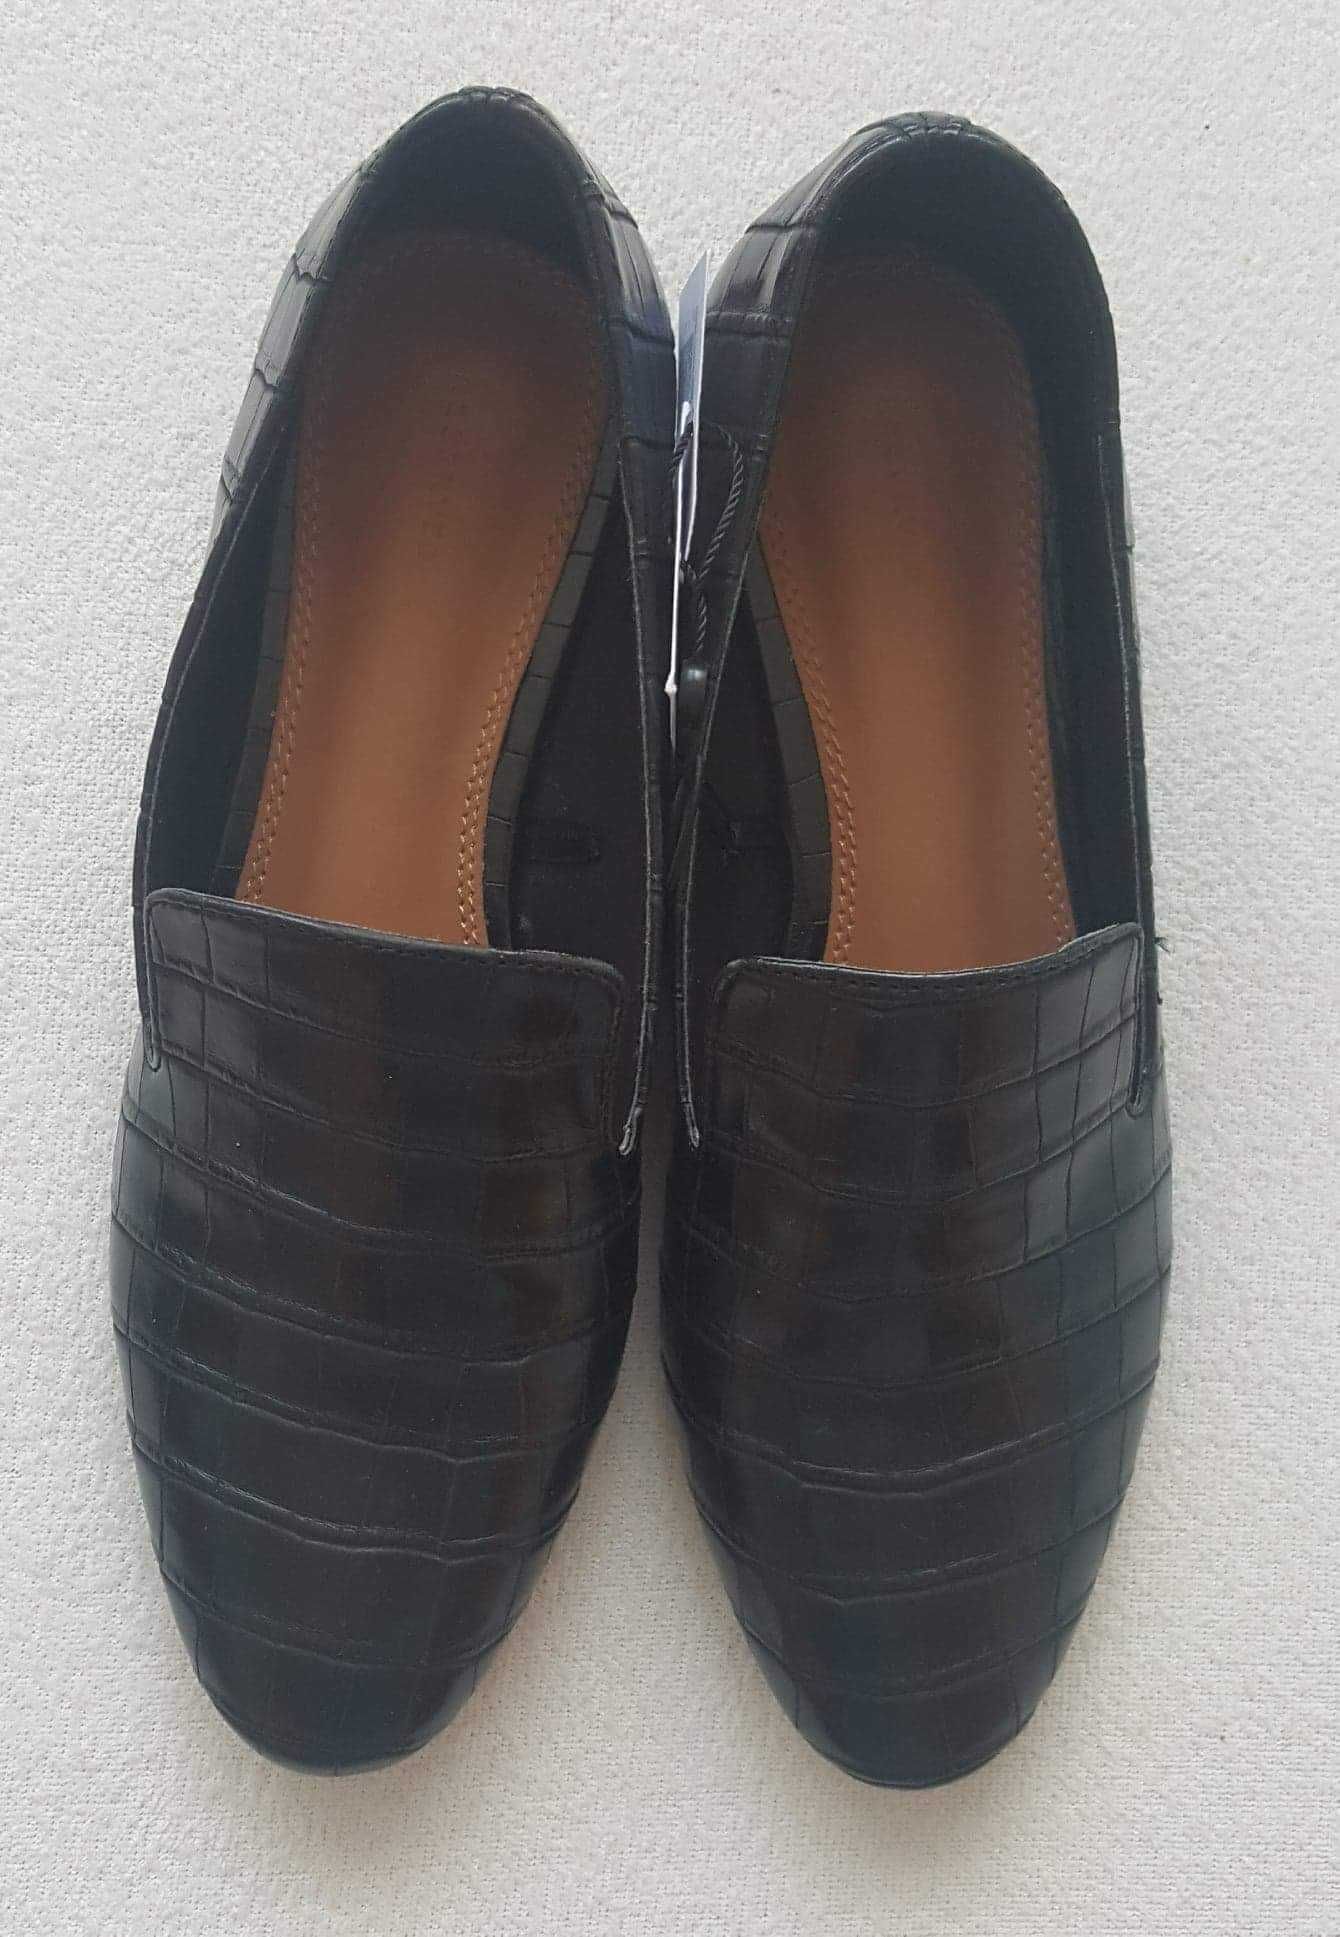 Buty nowe mokasyny Reserved czarne wzór skóra krokodyla 36 23.5 cm